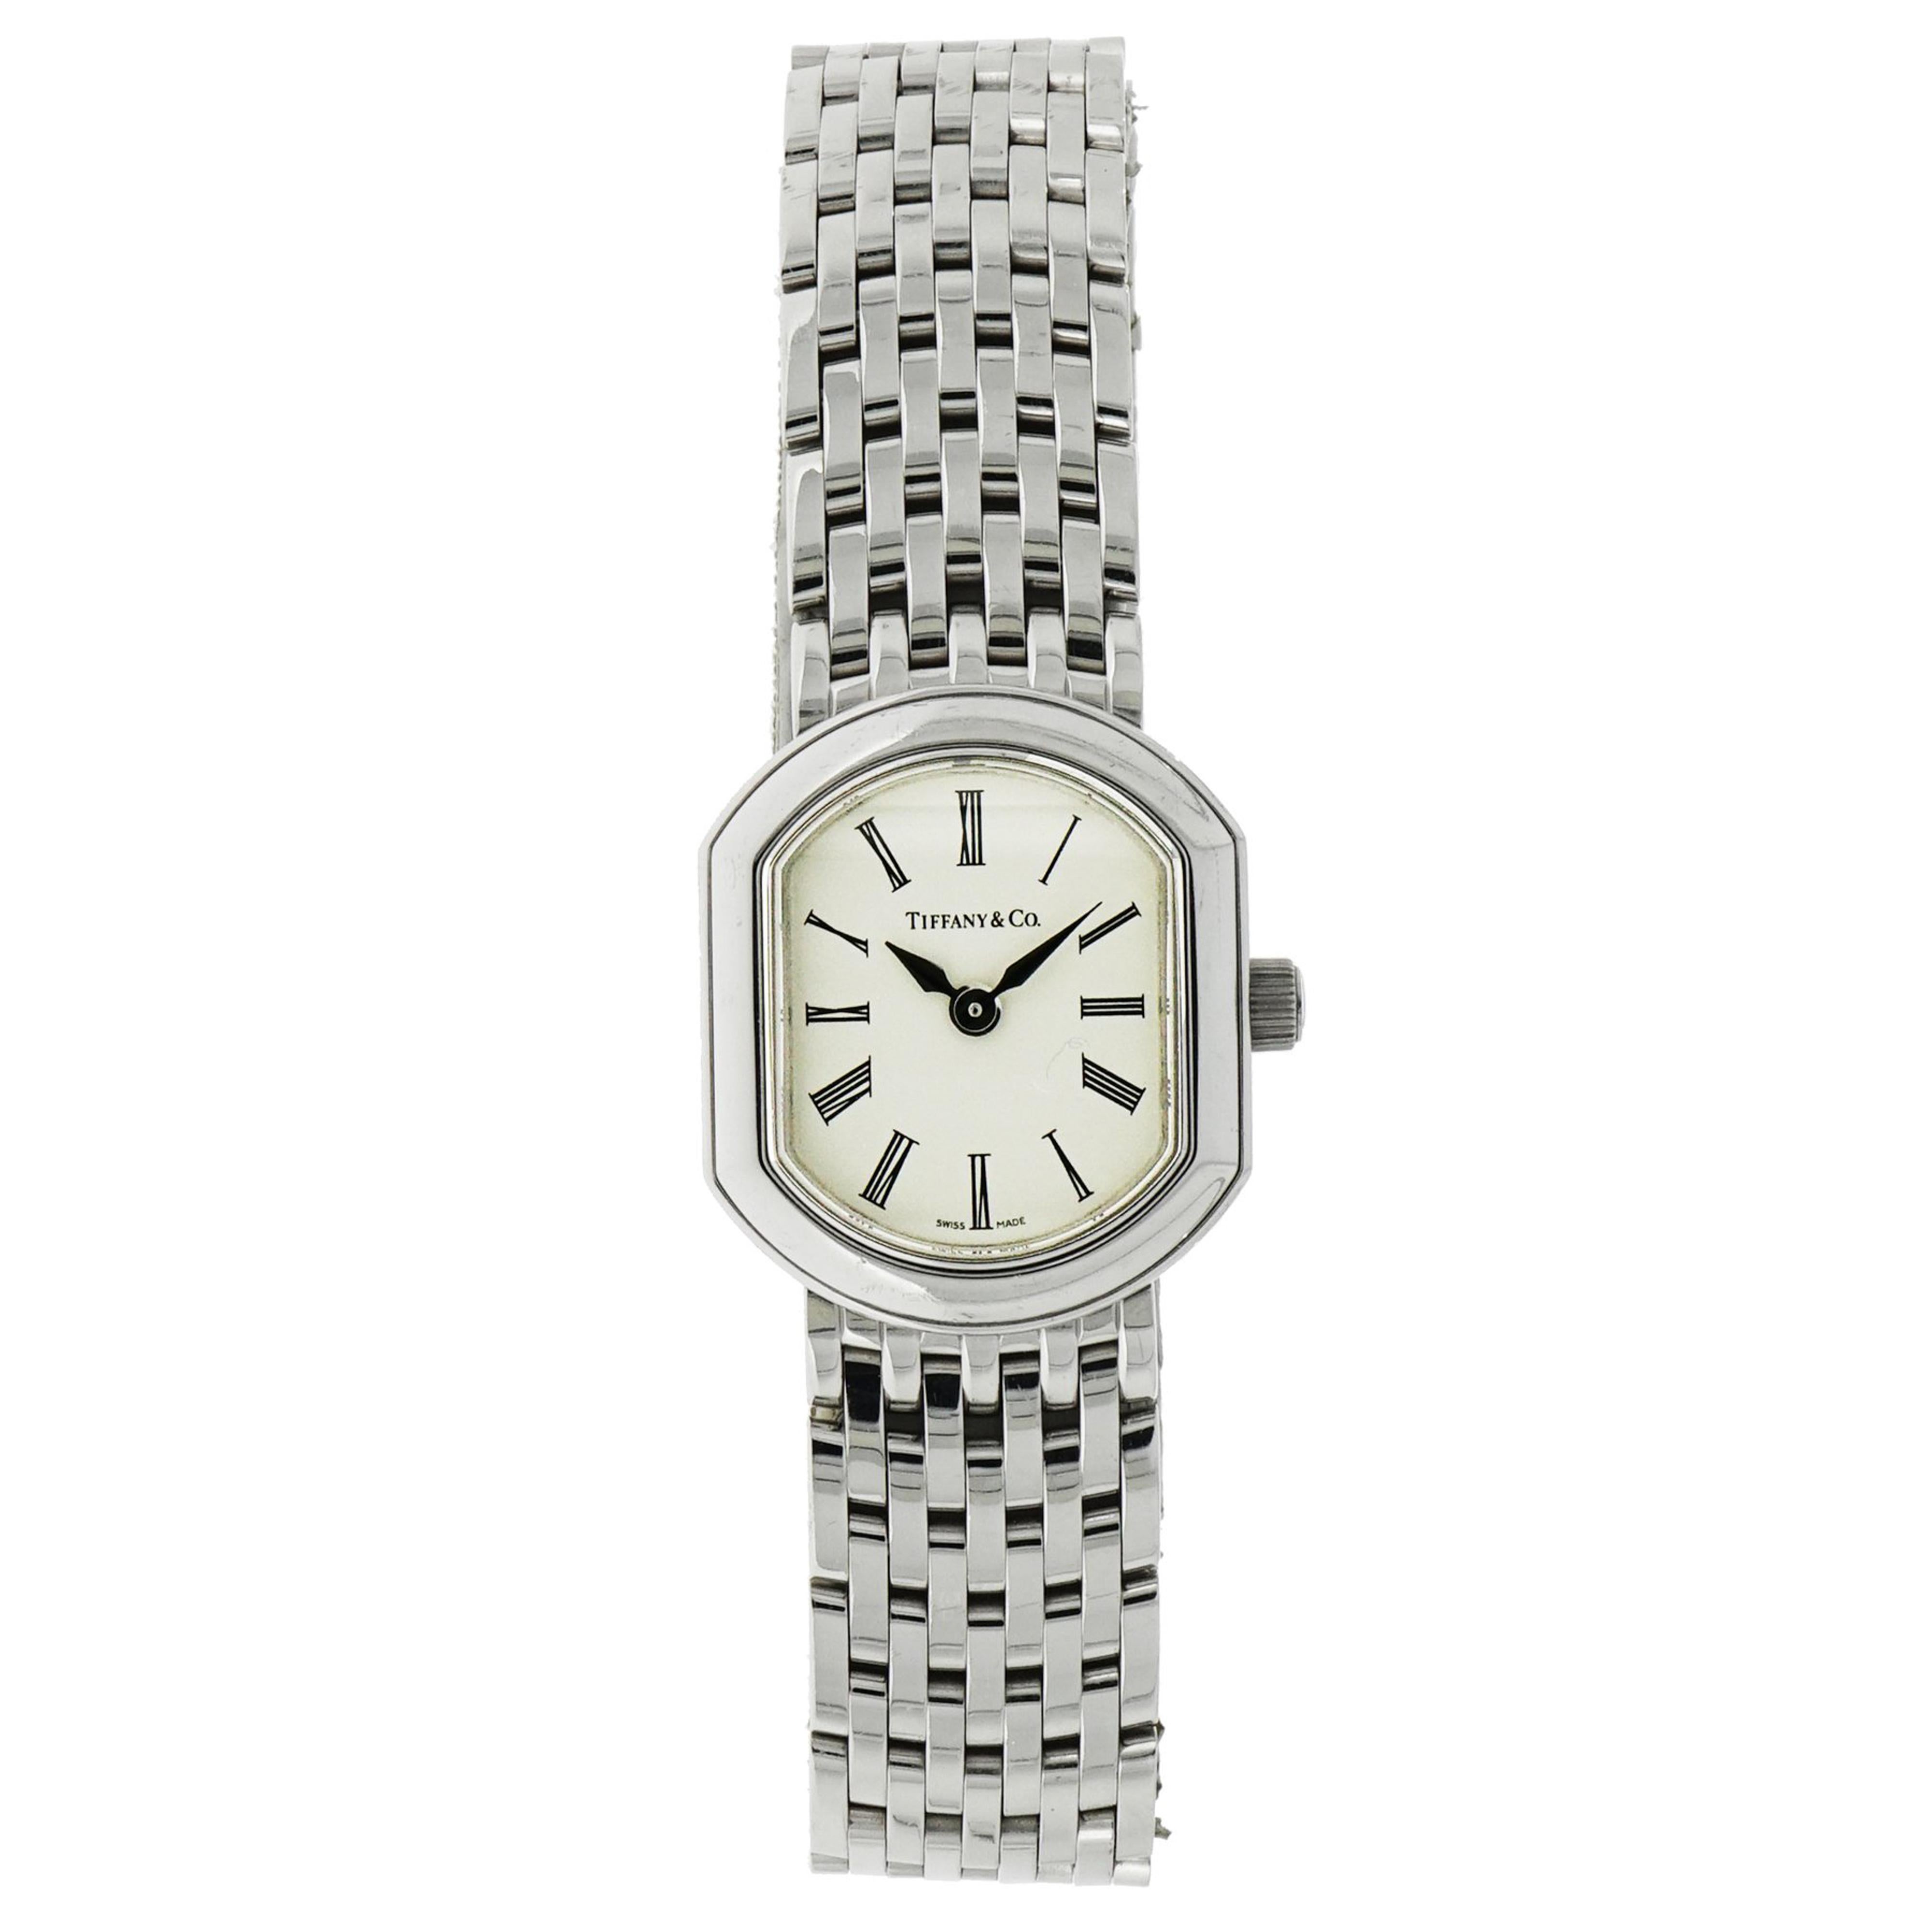 Tiffany & Co. Ladies White Gold Quartz Wristwatch